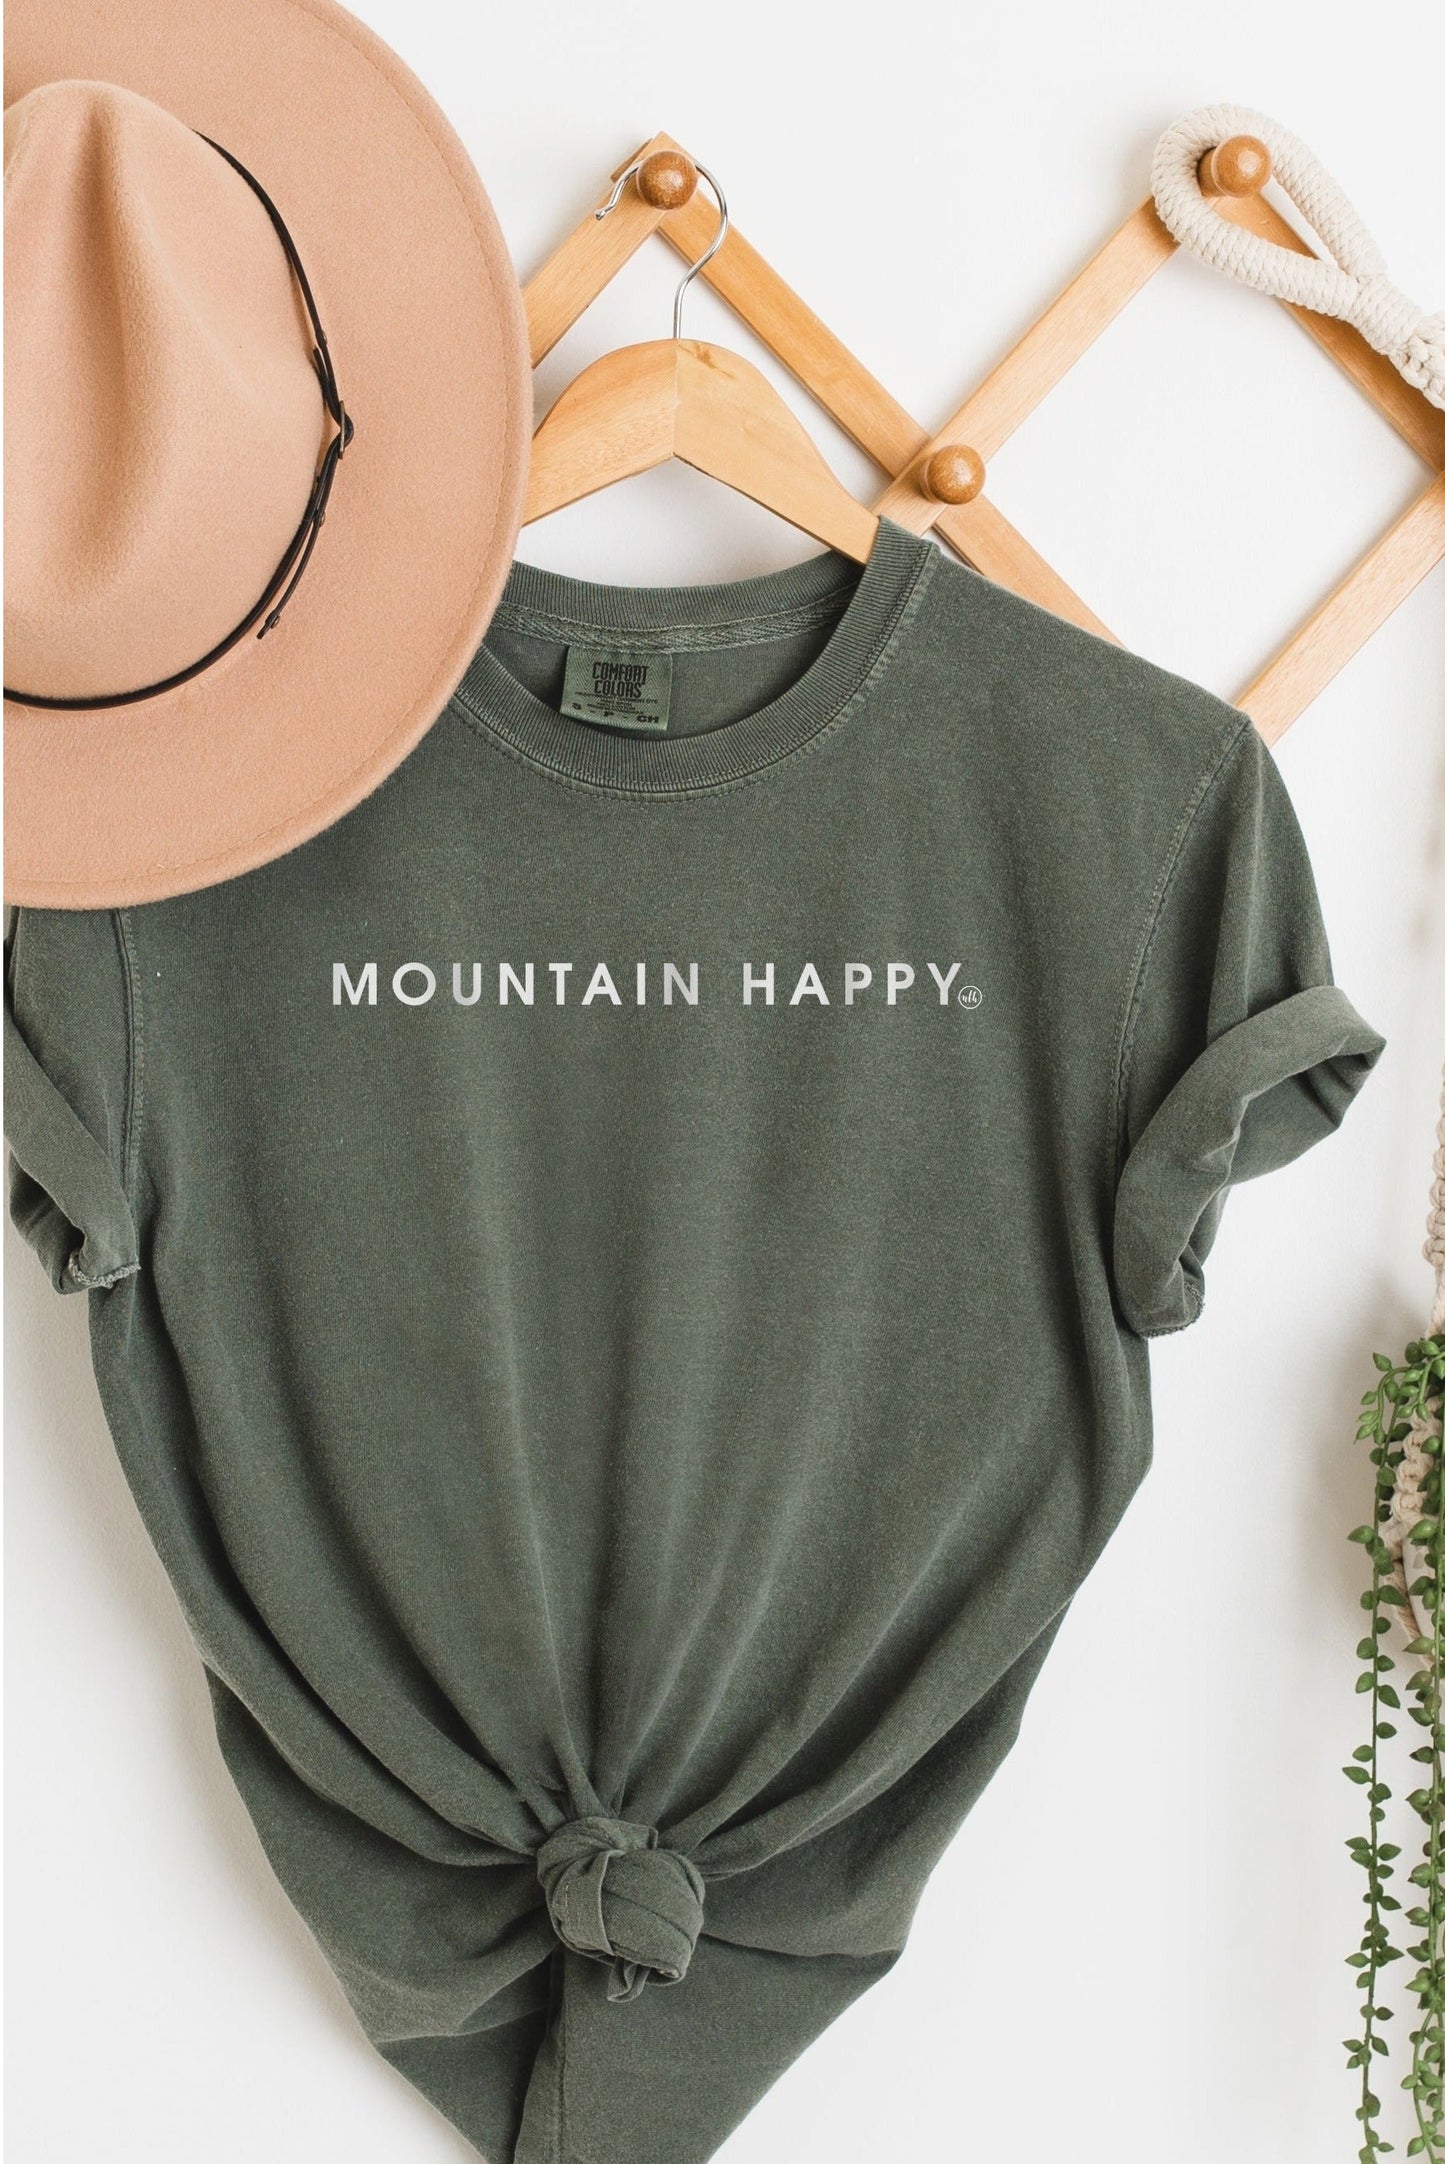 Inspirational Tee - Mountain Happy